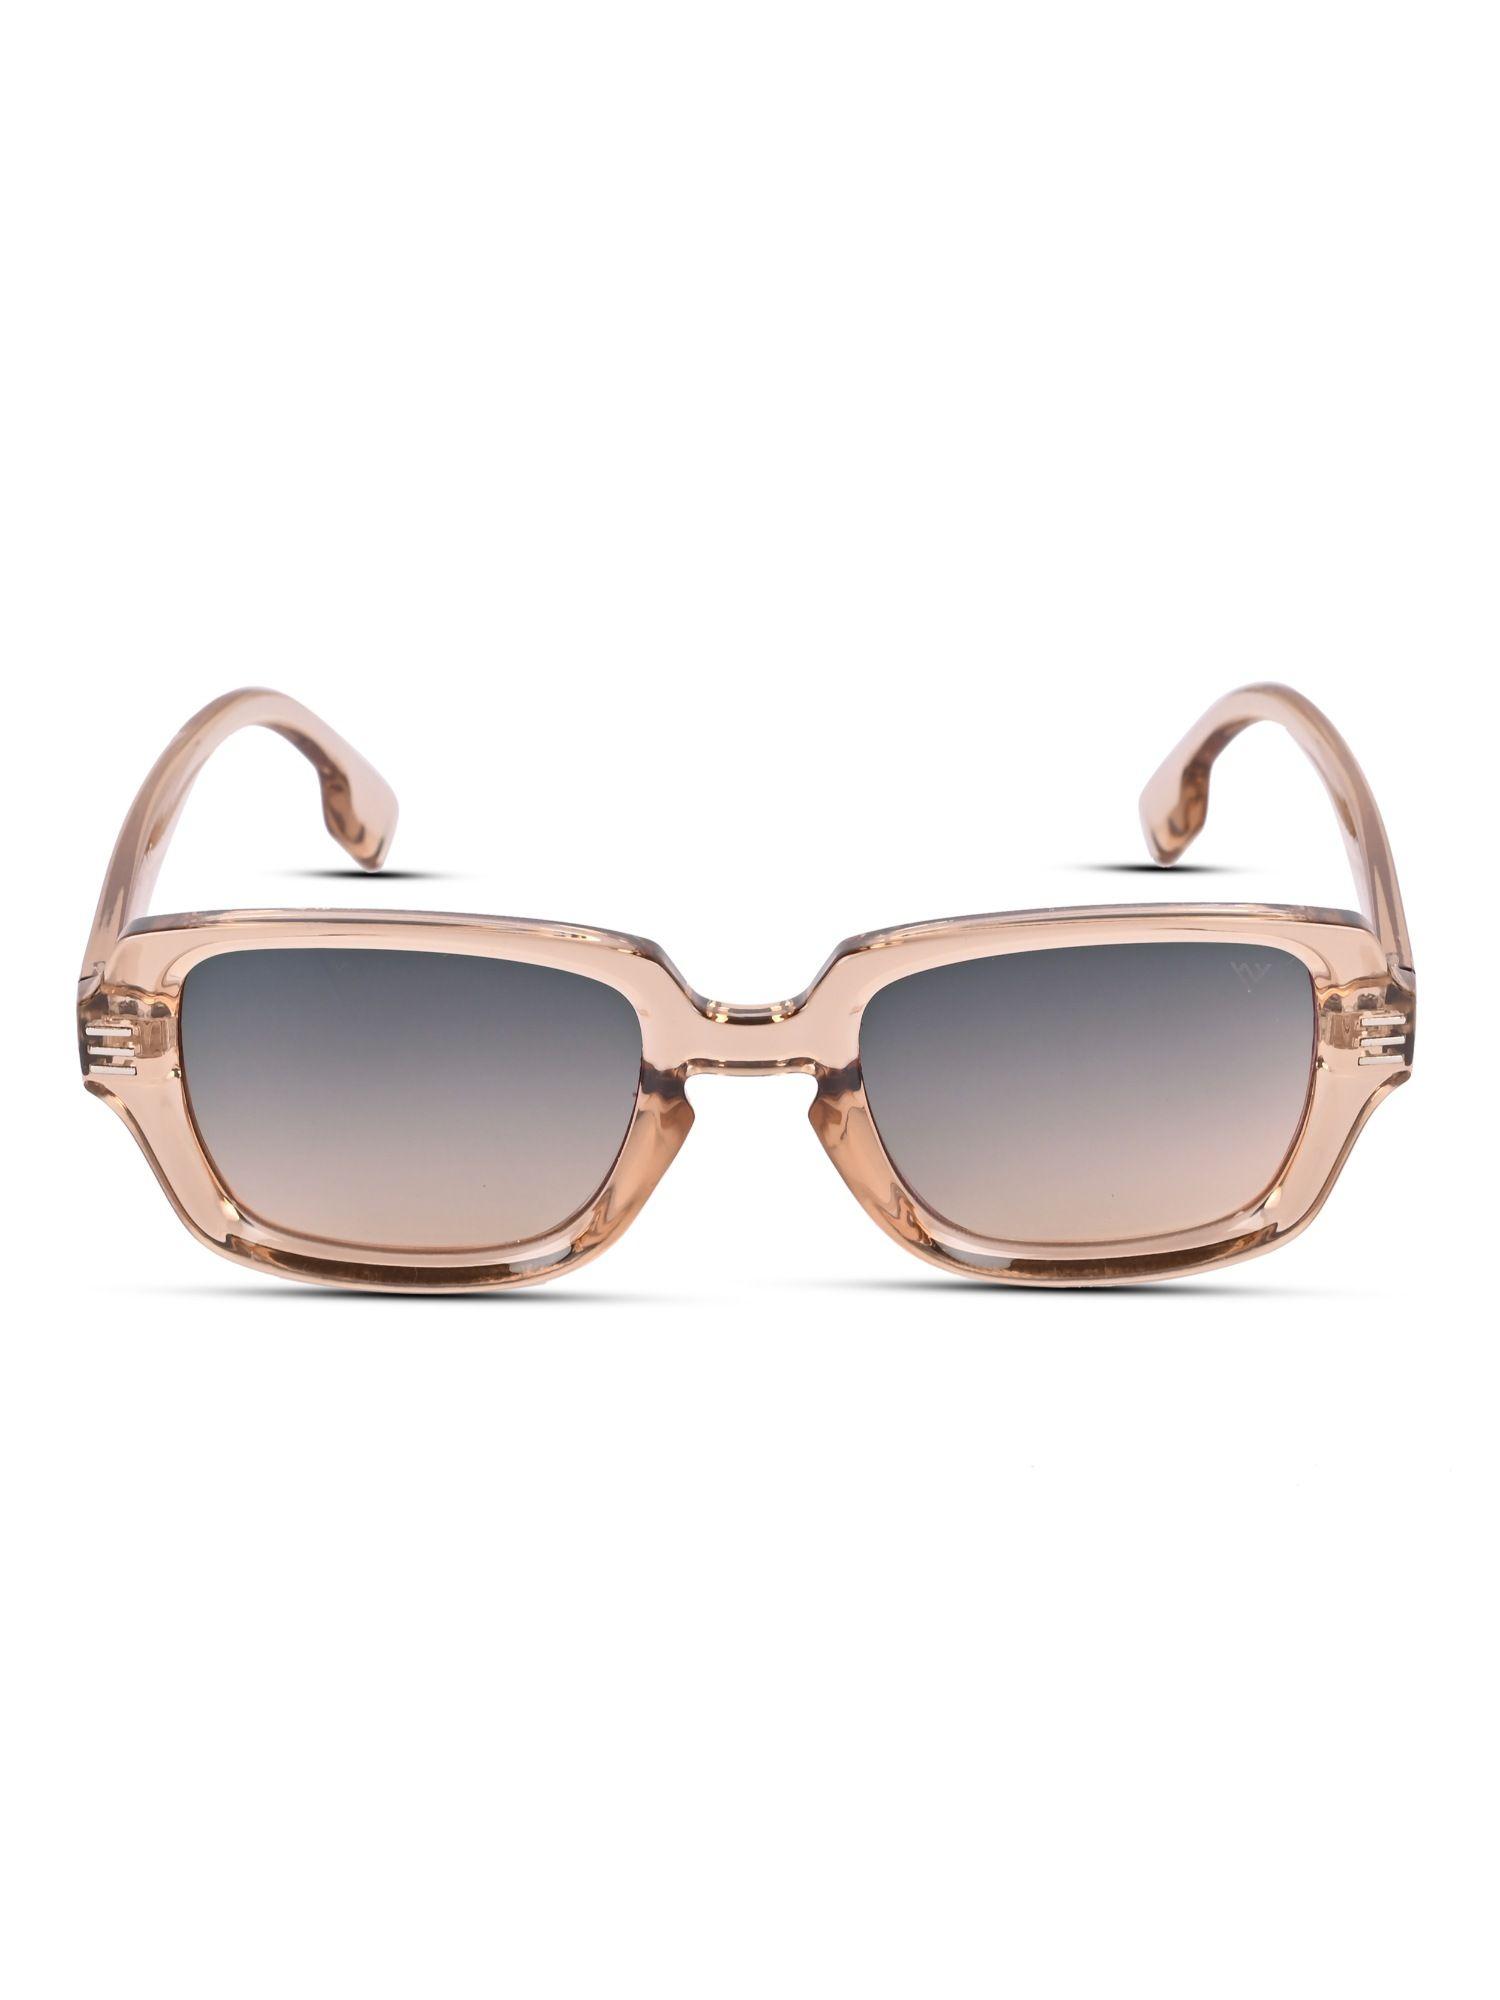 grey & light brown gradient wayfarer sunglasses for unisex (2819mg3700)